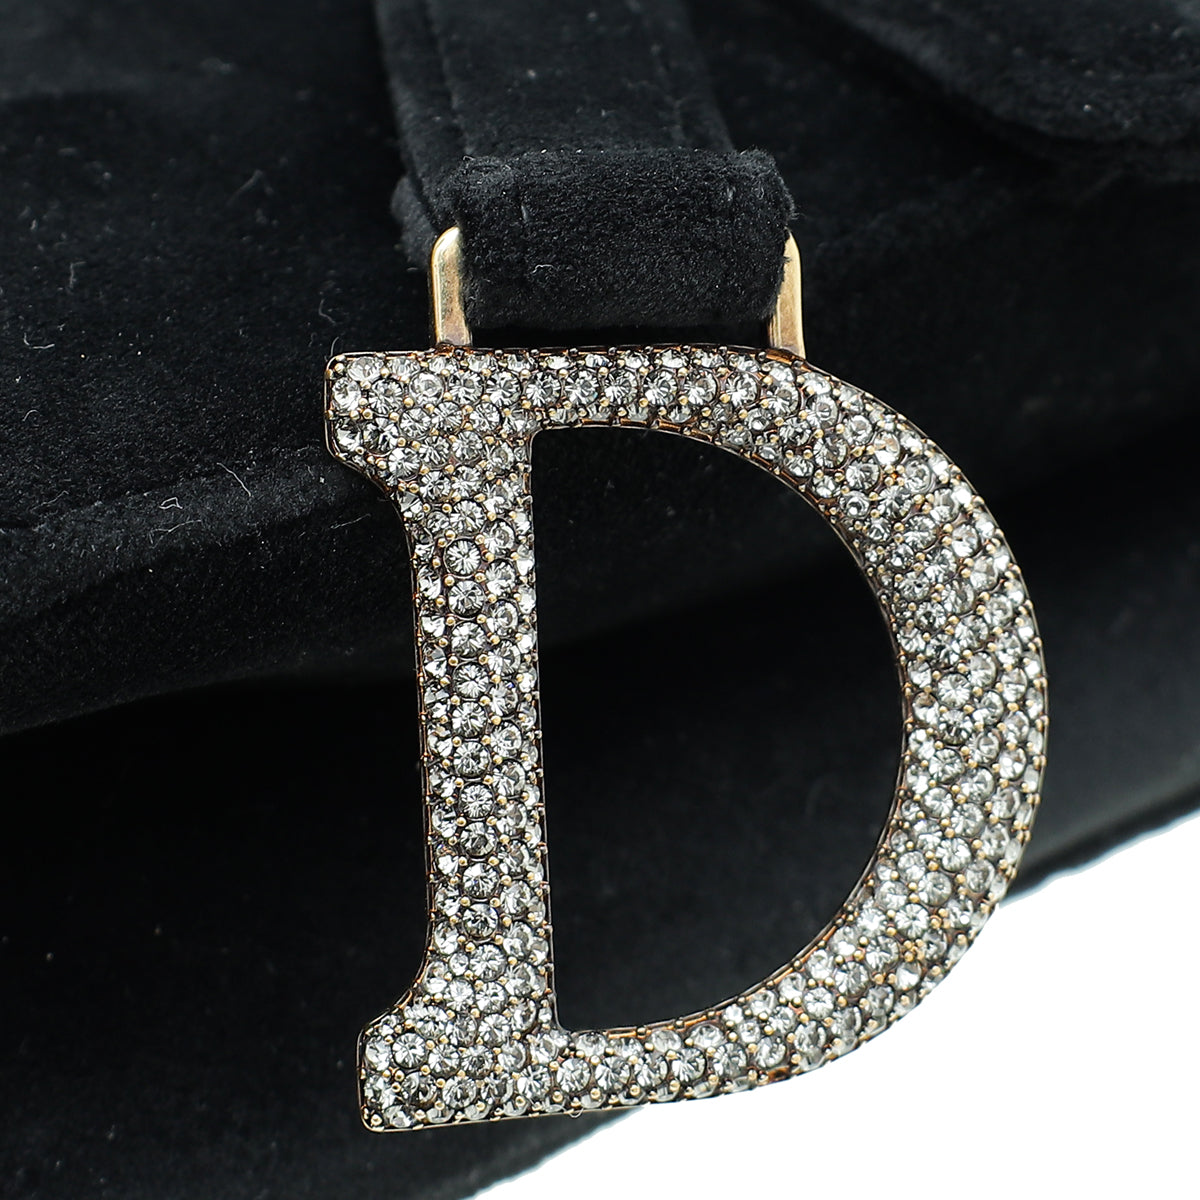 Christian Dior Black Velvet Saddle Mini Crystal Bag